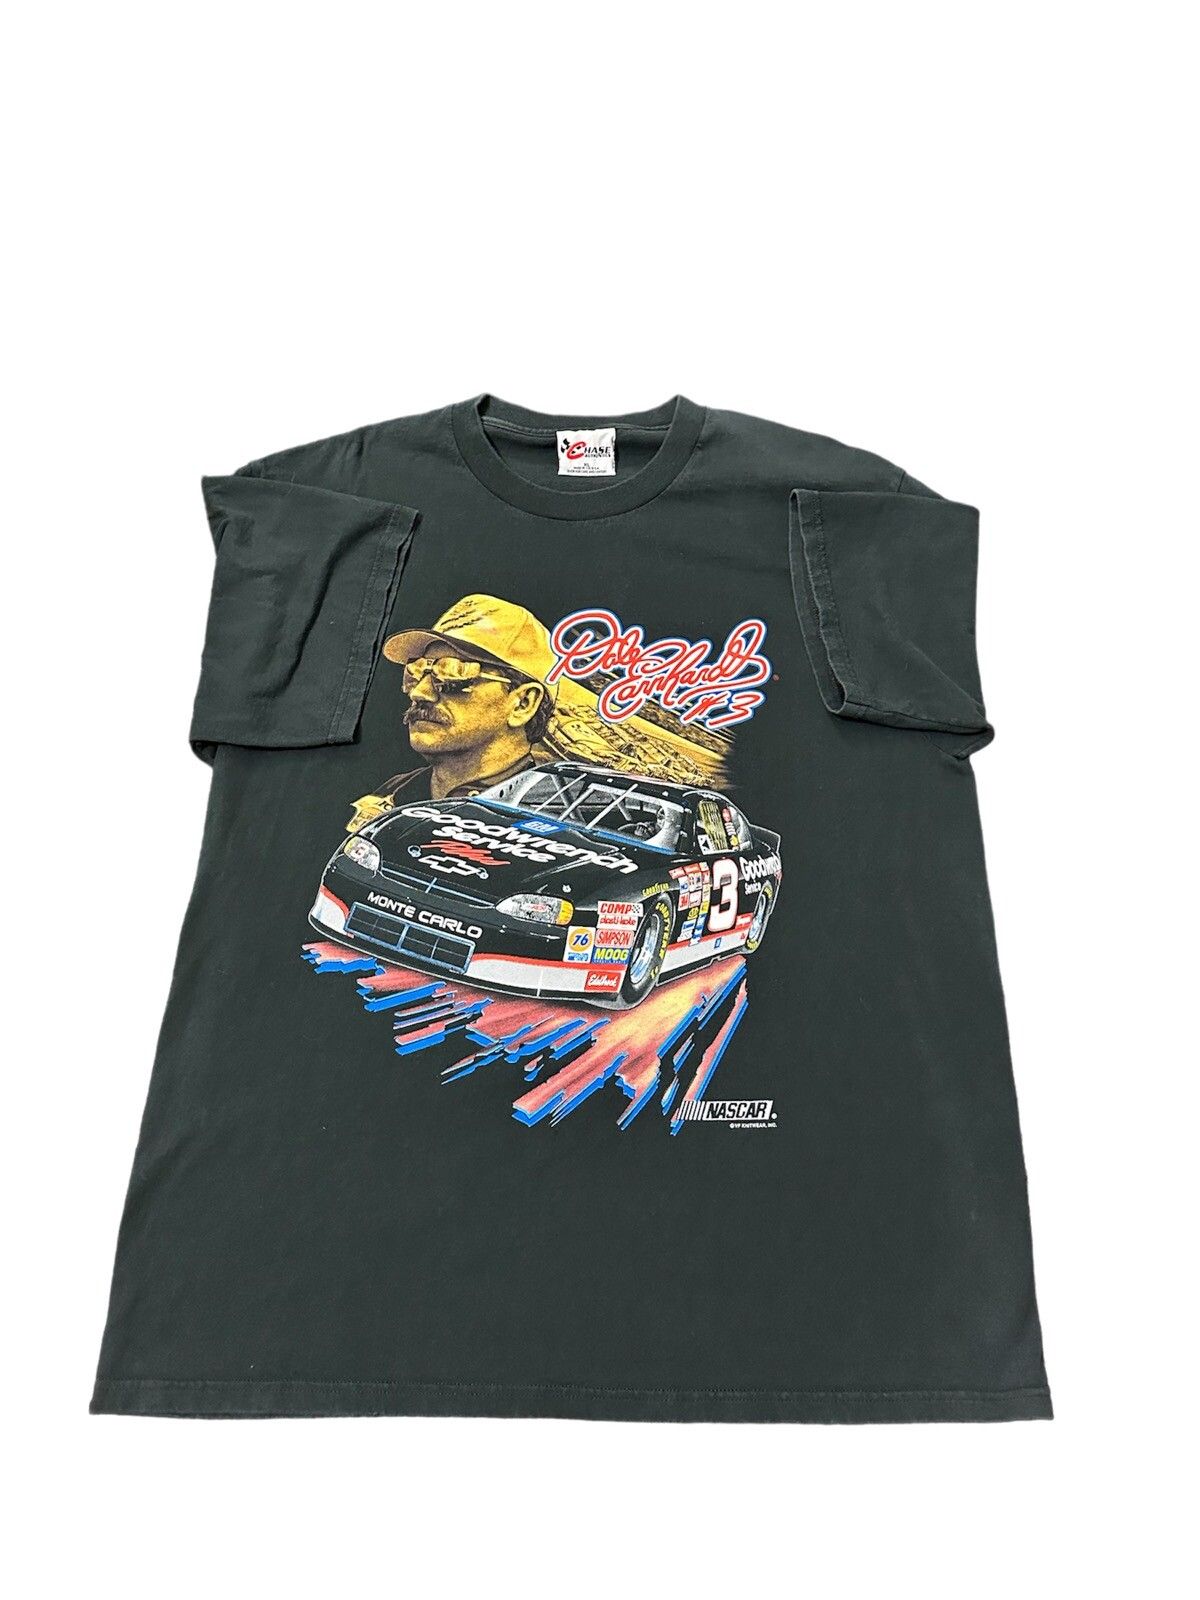 Vintage Vintage Dale Sr. NASCAR T-Shirt Size US XL / EU 56 / 4 - 1 Preview